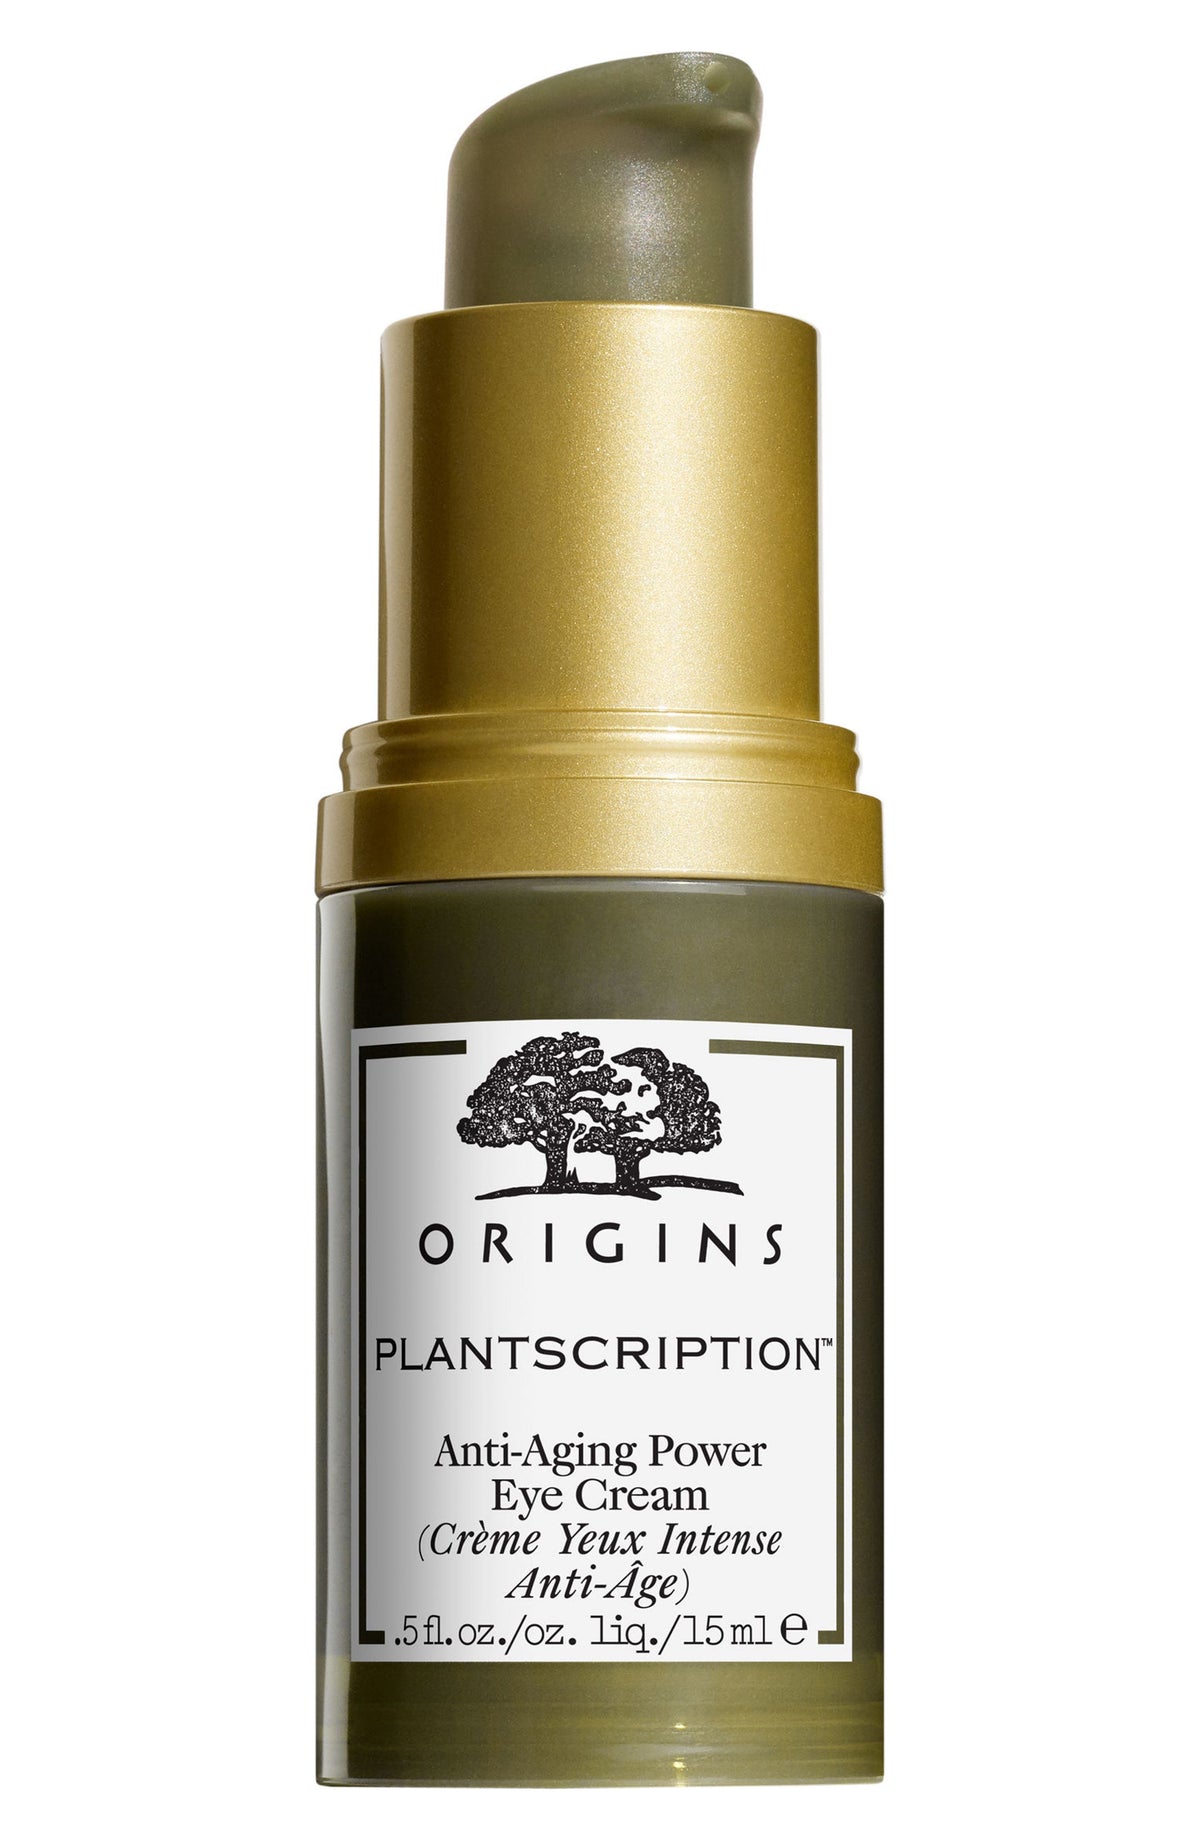 Origins Plantscription Anti-Aging Power Eye Cream